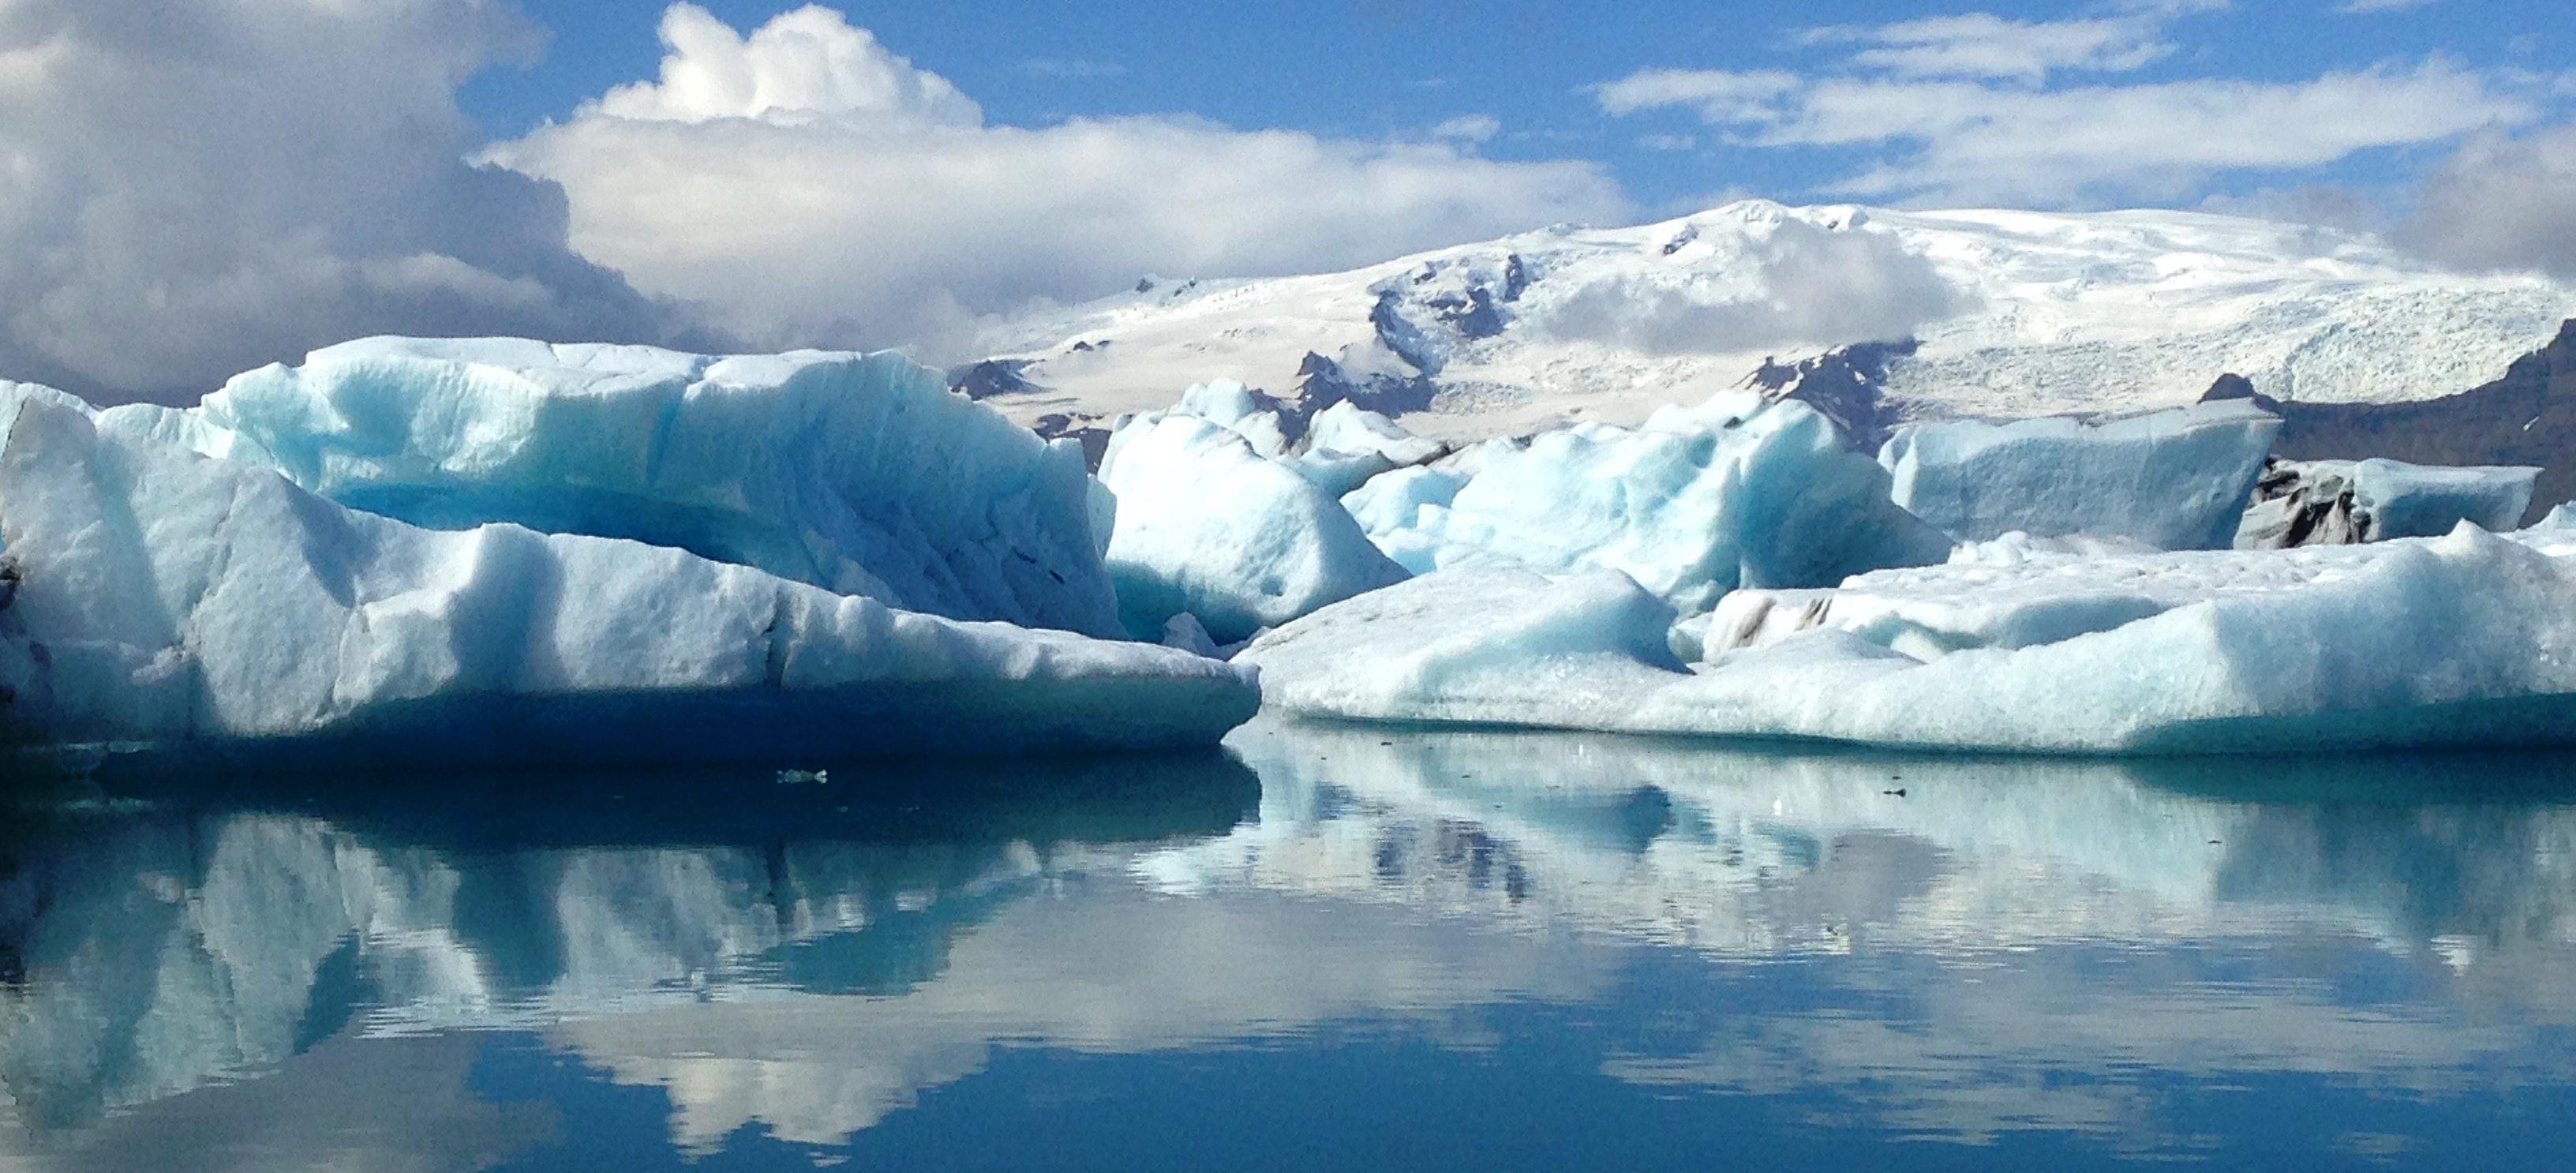 Drive Through Iceland 9: Icebergs & Glacier Walk | Badri's Blog